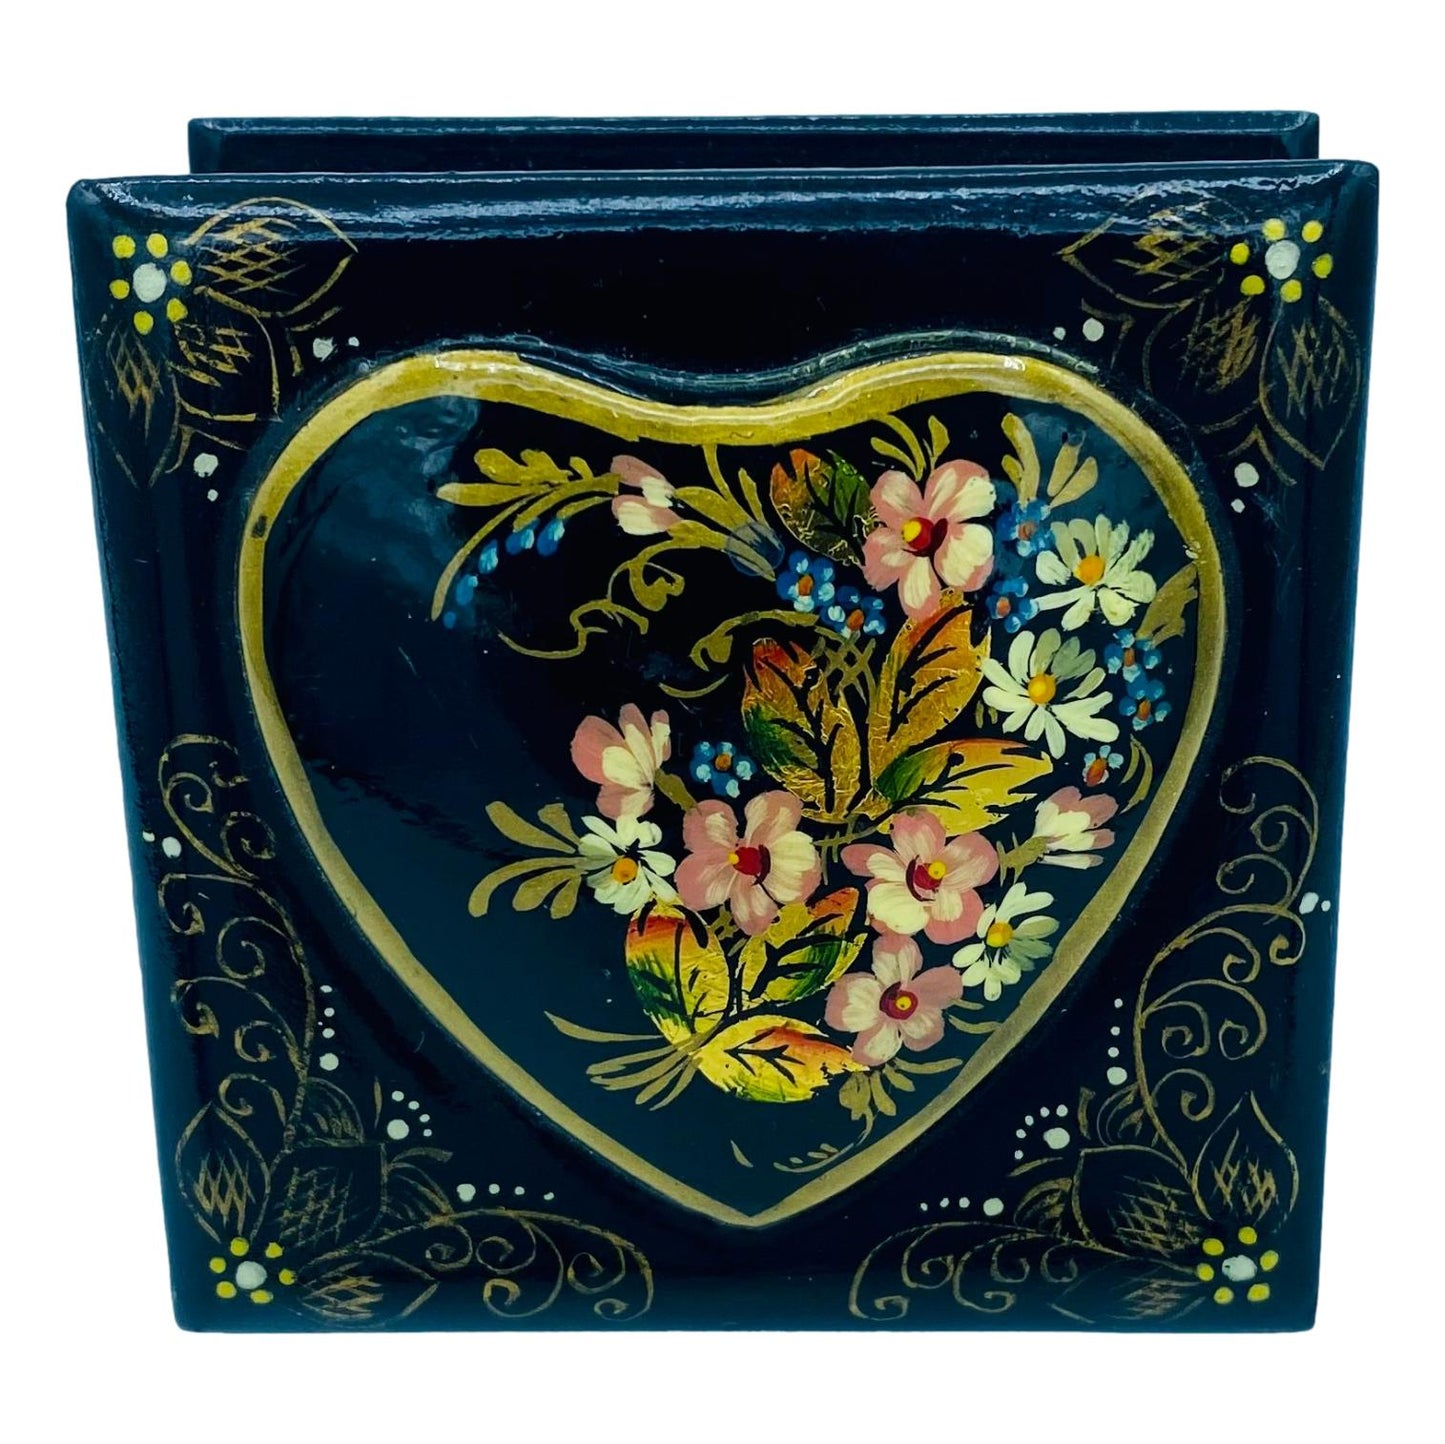 Heart Emblem Jewelry Box